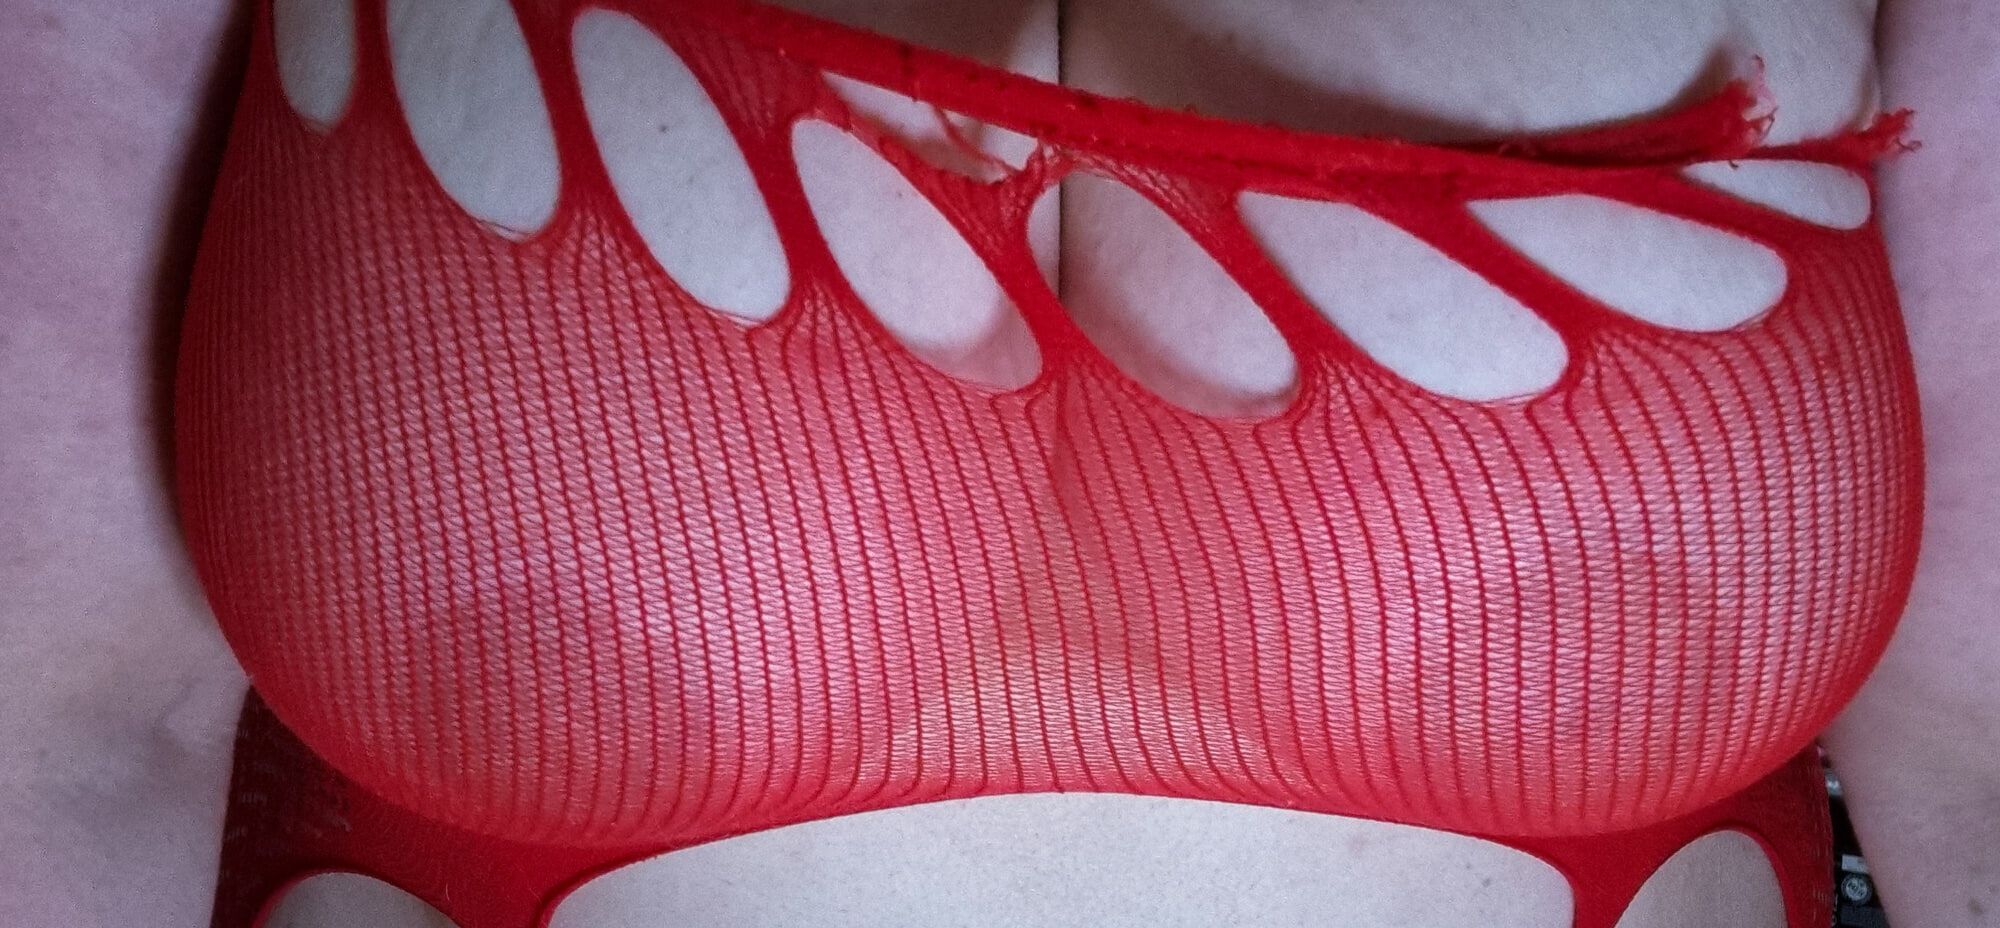 Red net body stockings #2